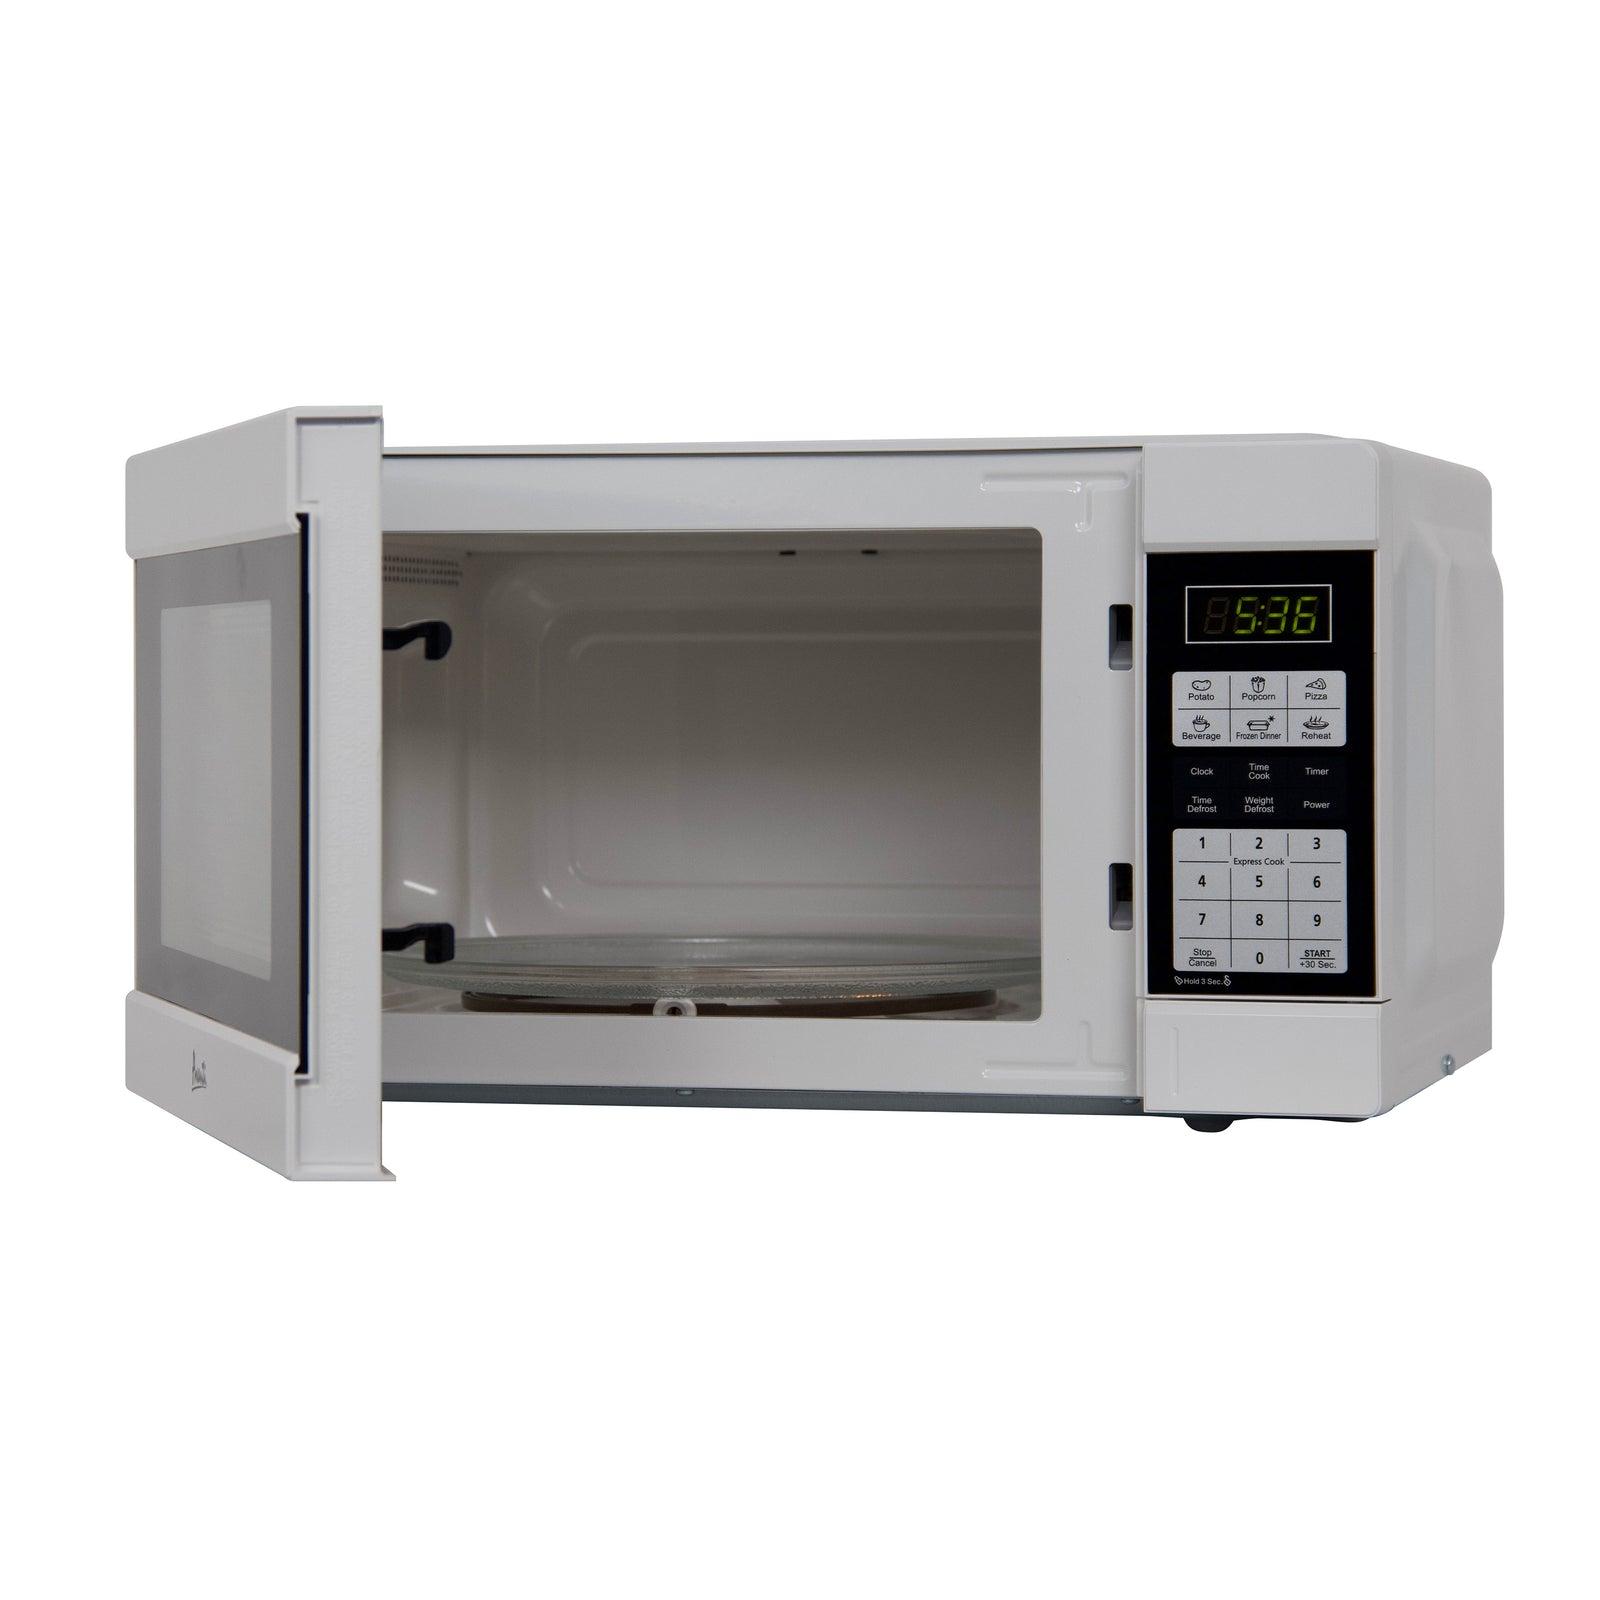 Avanti 0.7 Cu. ft. 700W Countertop Manual Microwave Oven - Black